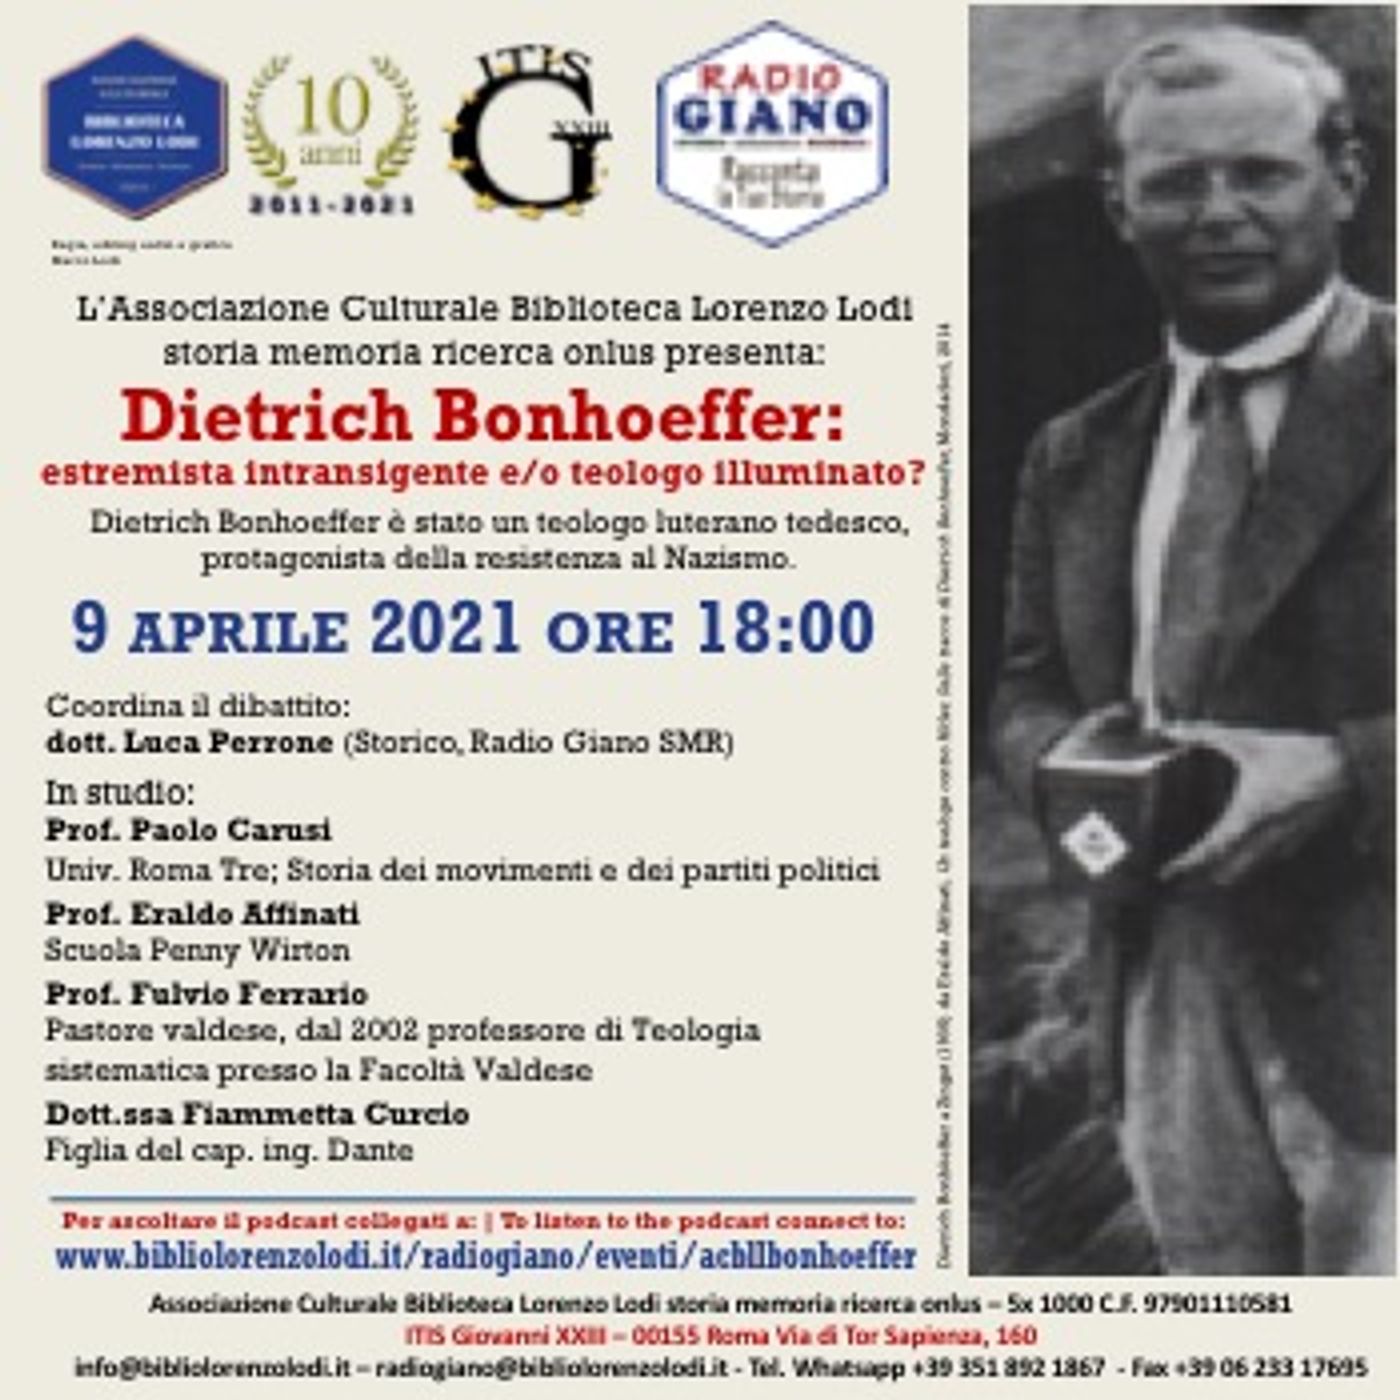 Dietrich Bonhoeffer: estremista intransigente e/o teologo illuminato?